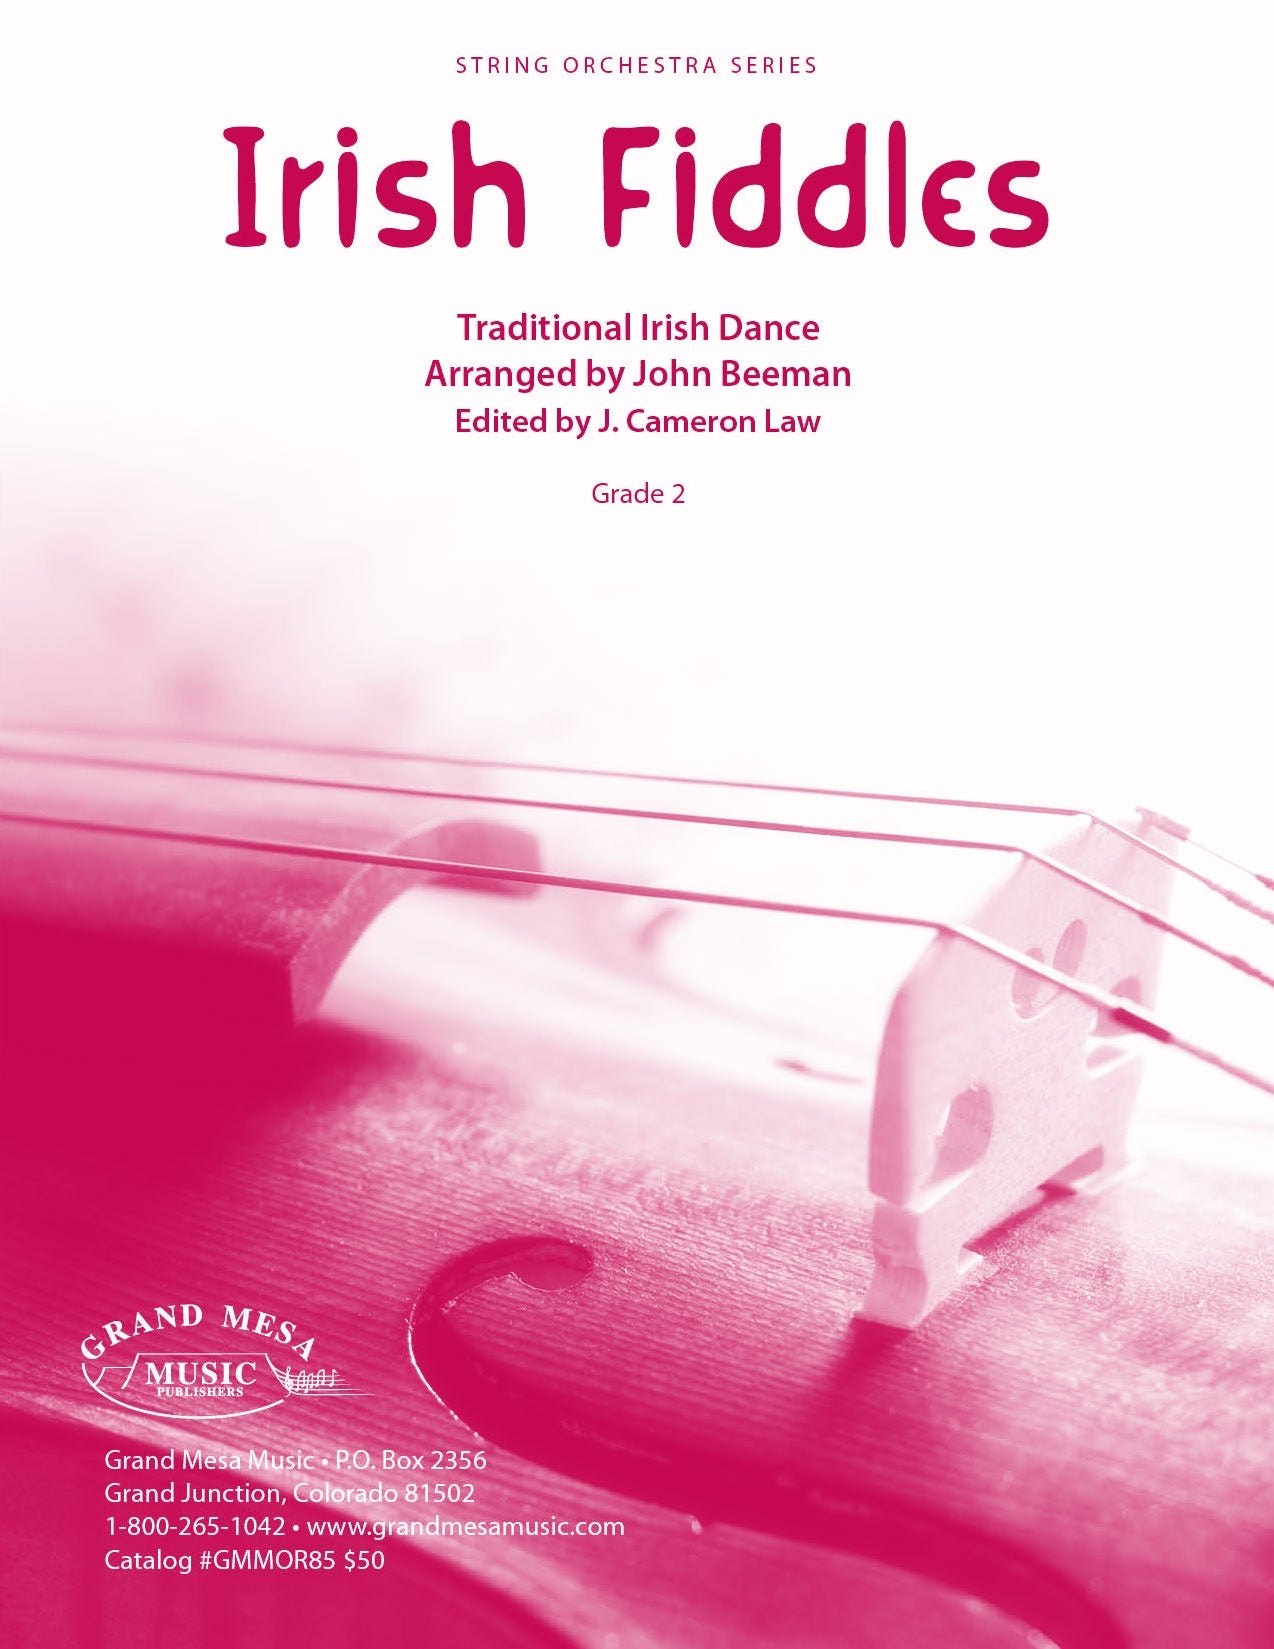 Strings sheet music cover of Irish Fiddles, arranged by John Beeman.